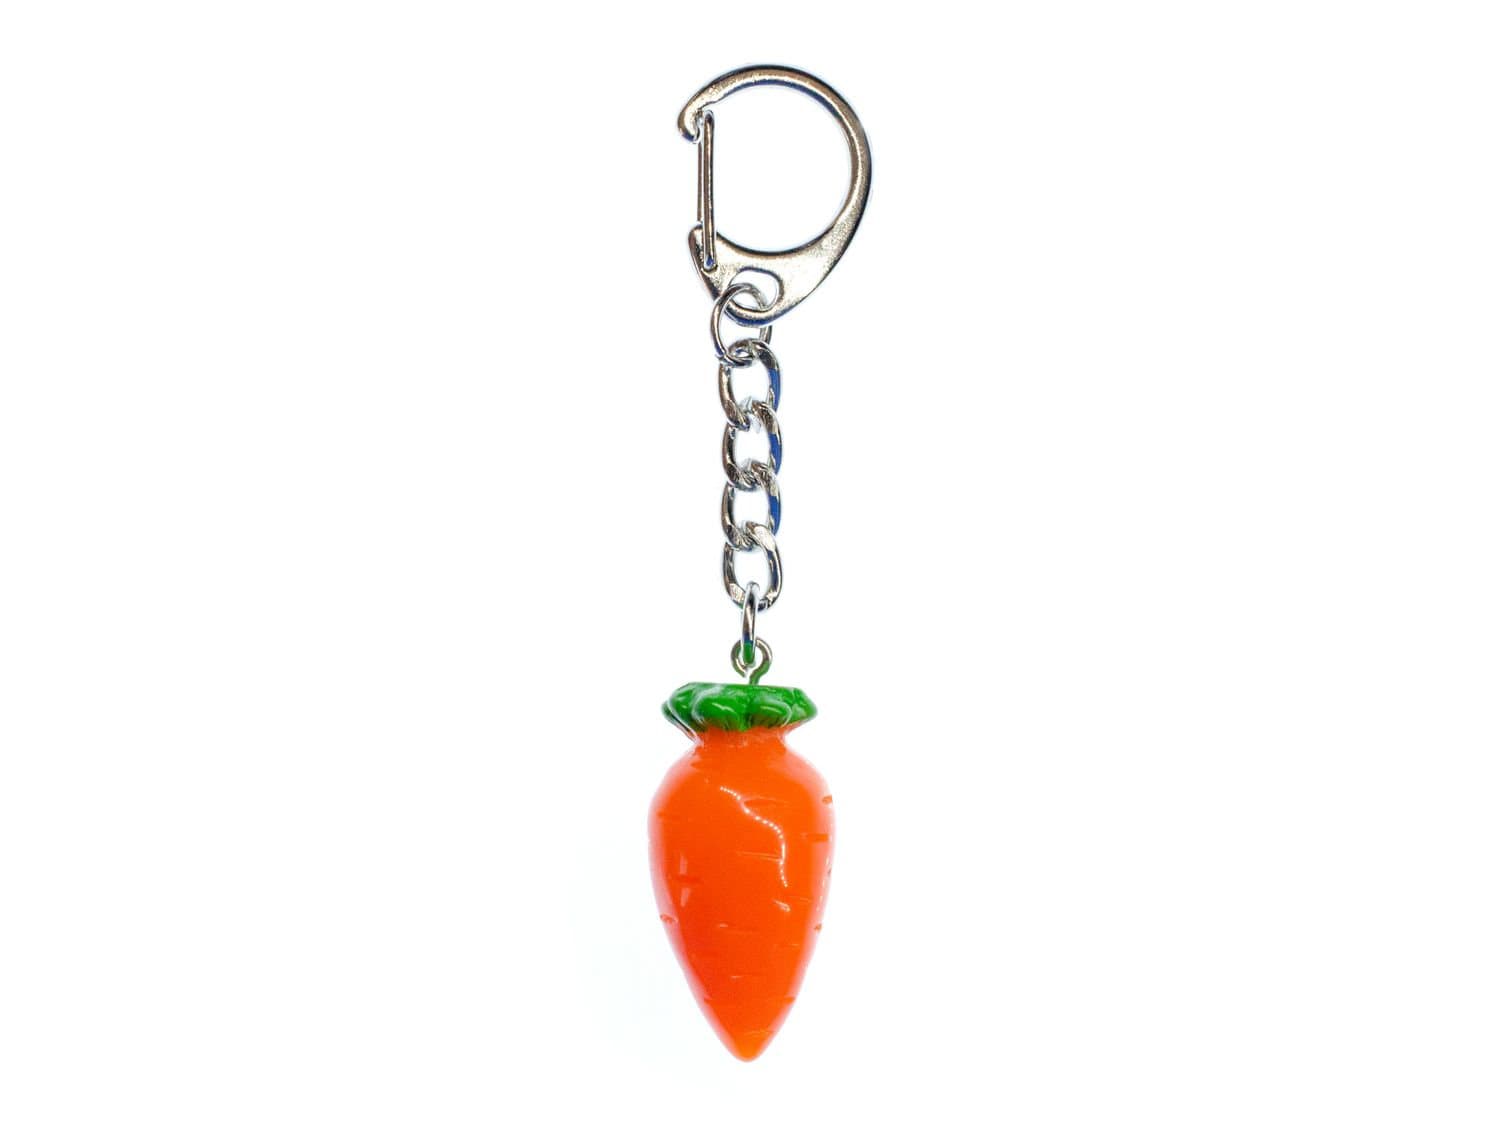 Karotte Schlüsselanhänger Miniblings Anhänger Schlüsselring Garten Gemüse Möhre von Miniblings